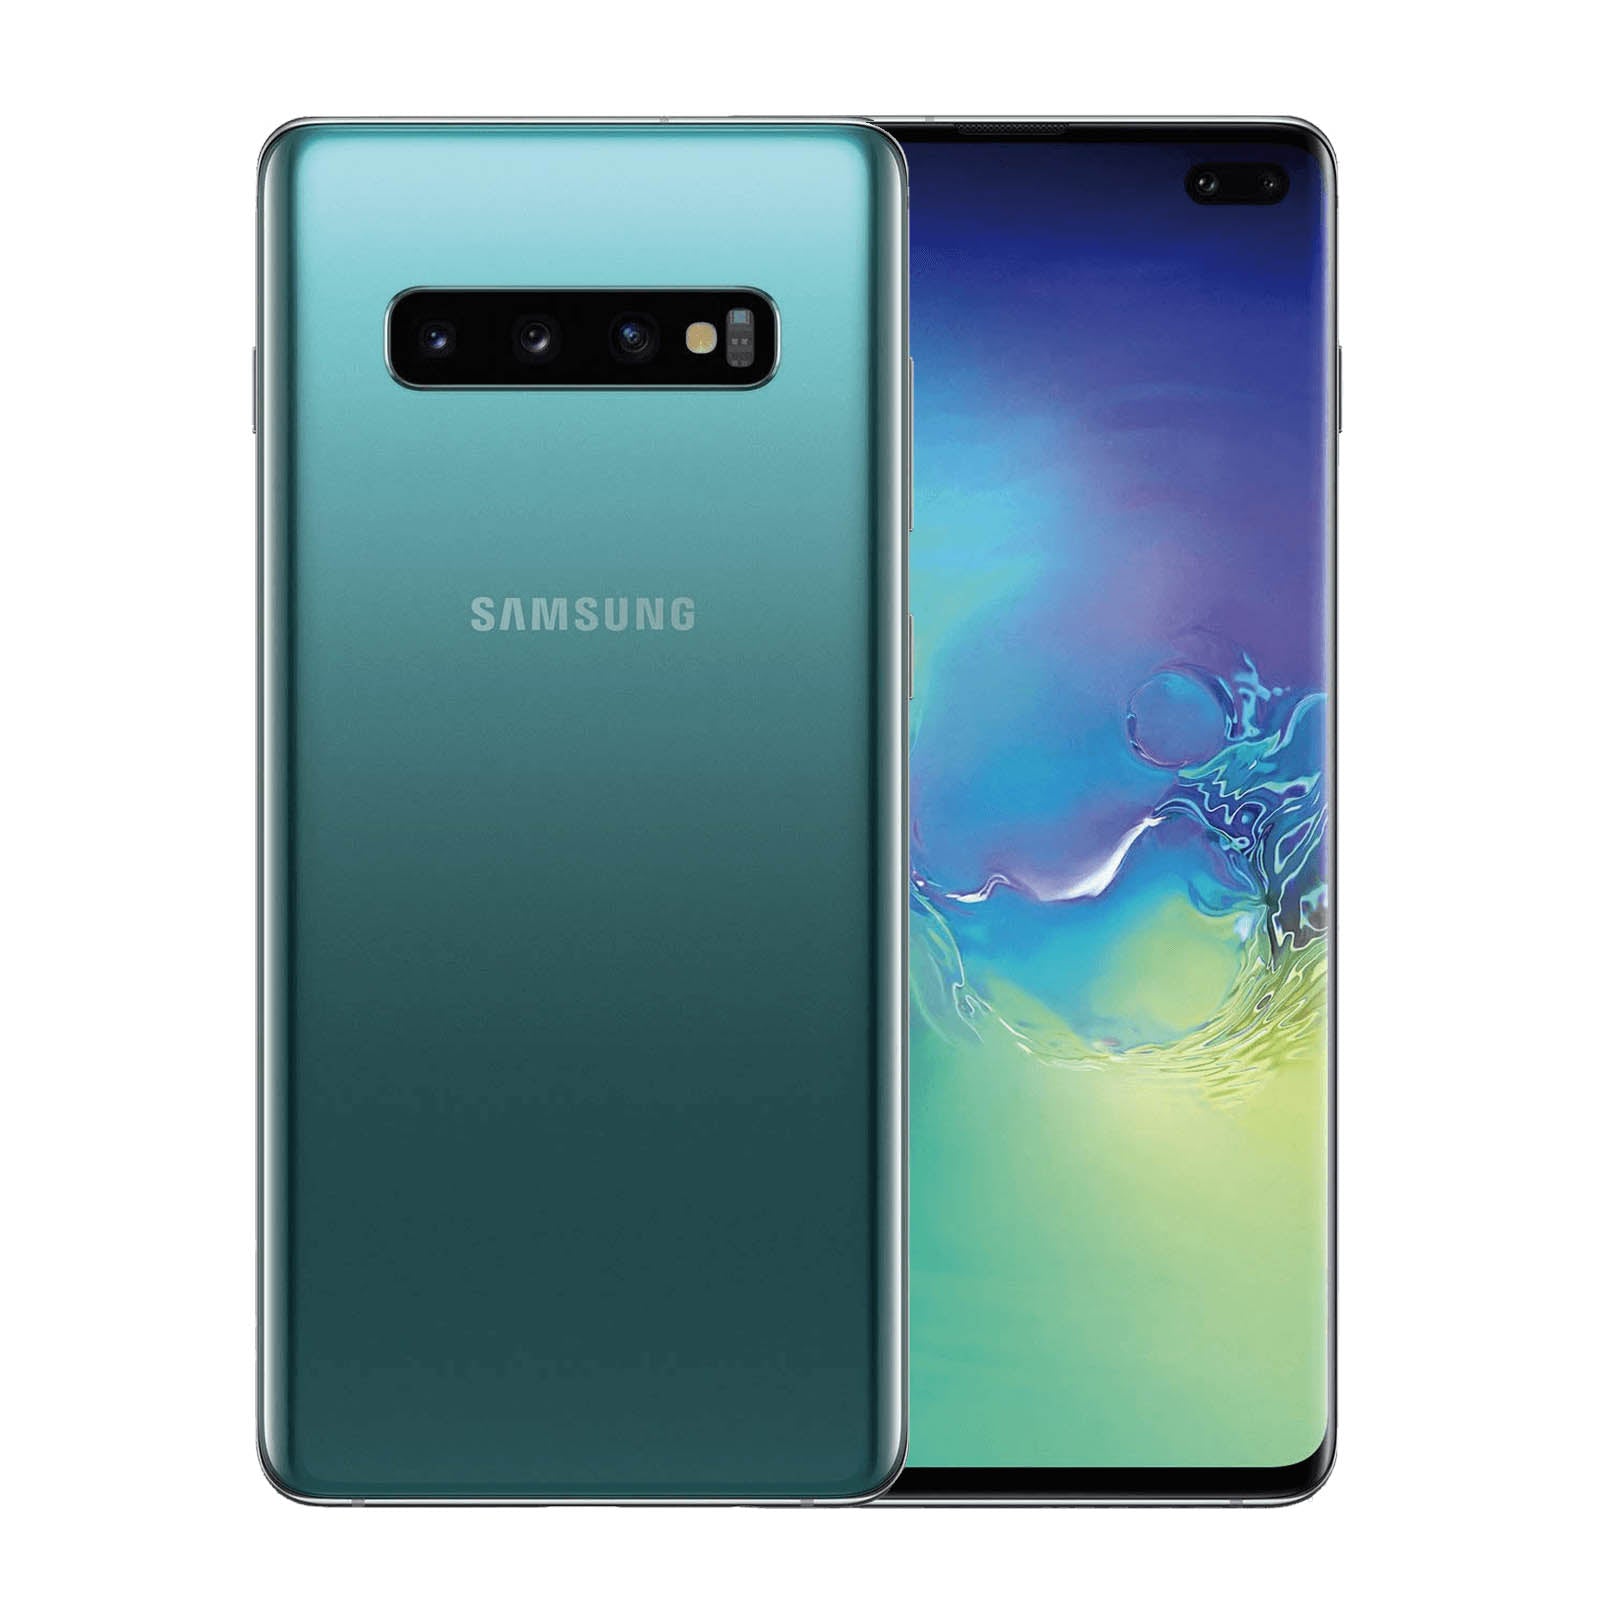 Samsung Galaxy S10 Plus 128GB Prism Green Fair - Unlocked